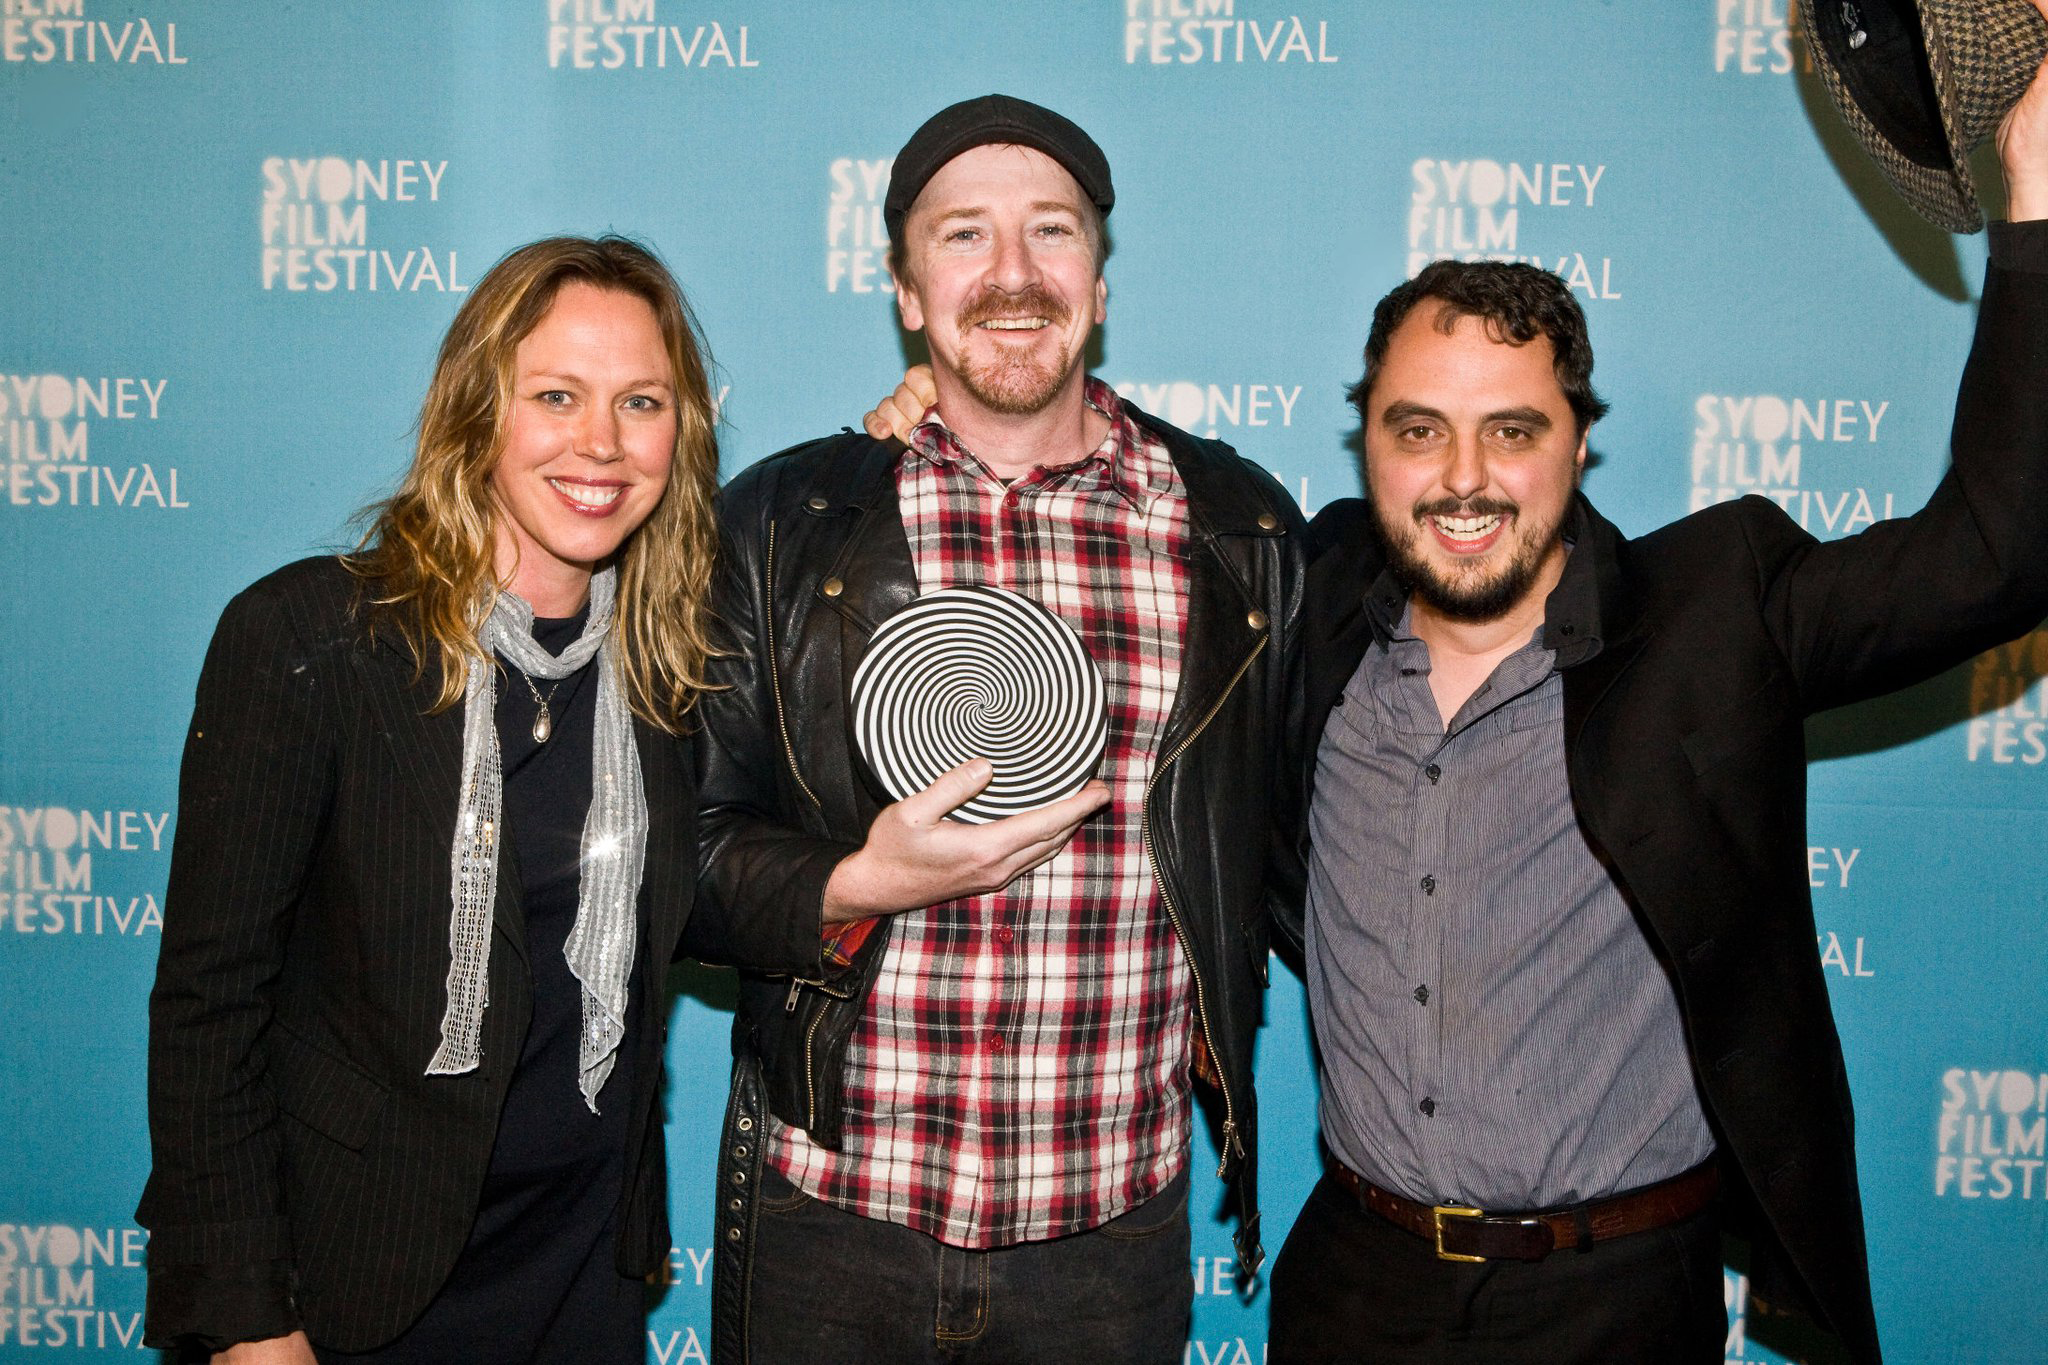 Katrina Mathers, Alister Lockhart, Patrick Sarell with the Yoram Gross Animation Award for 